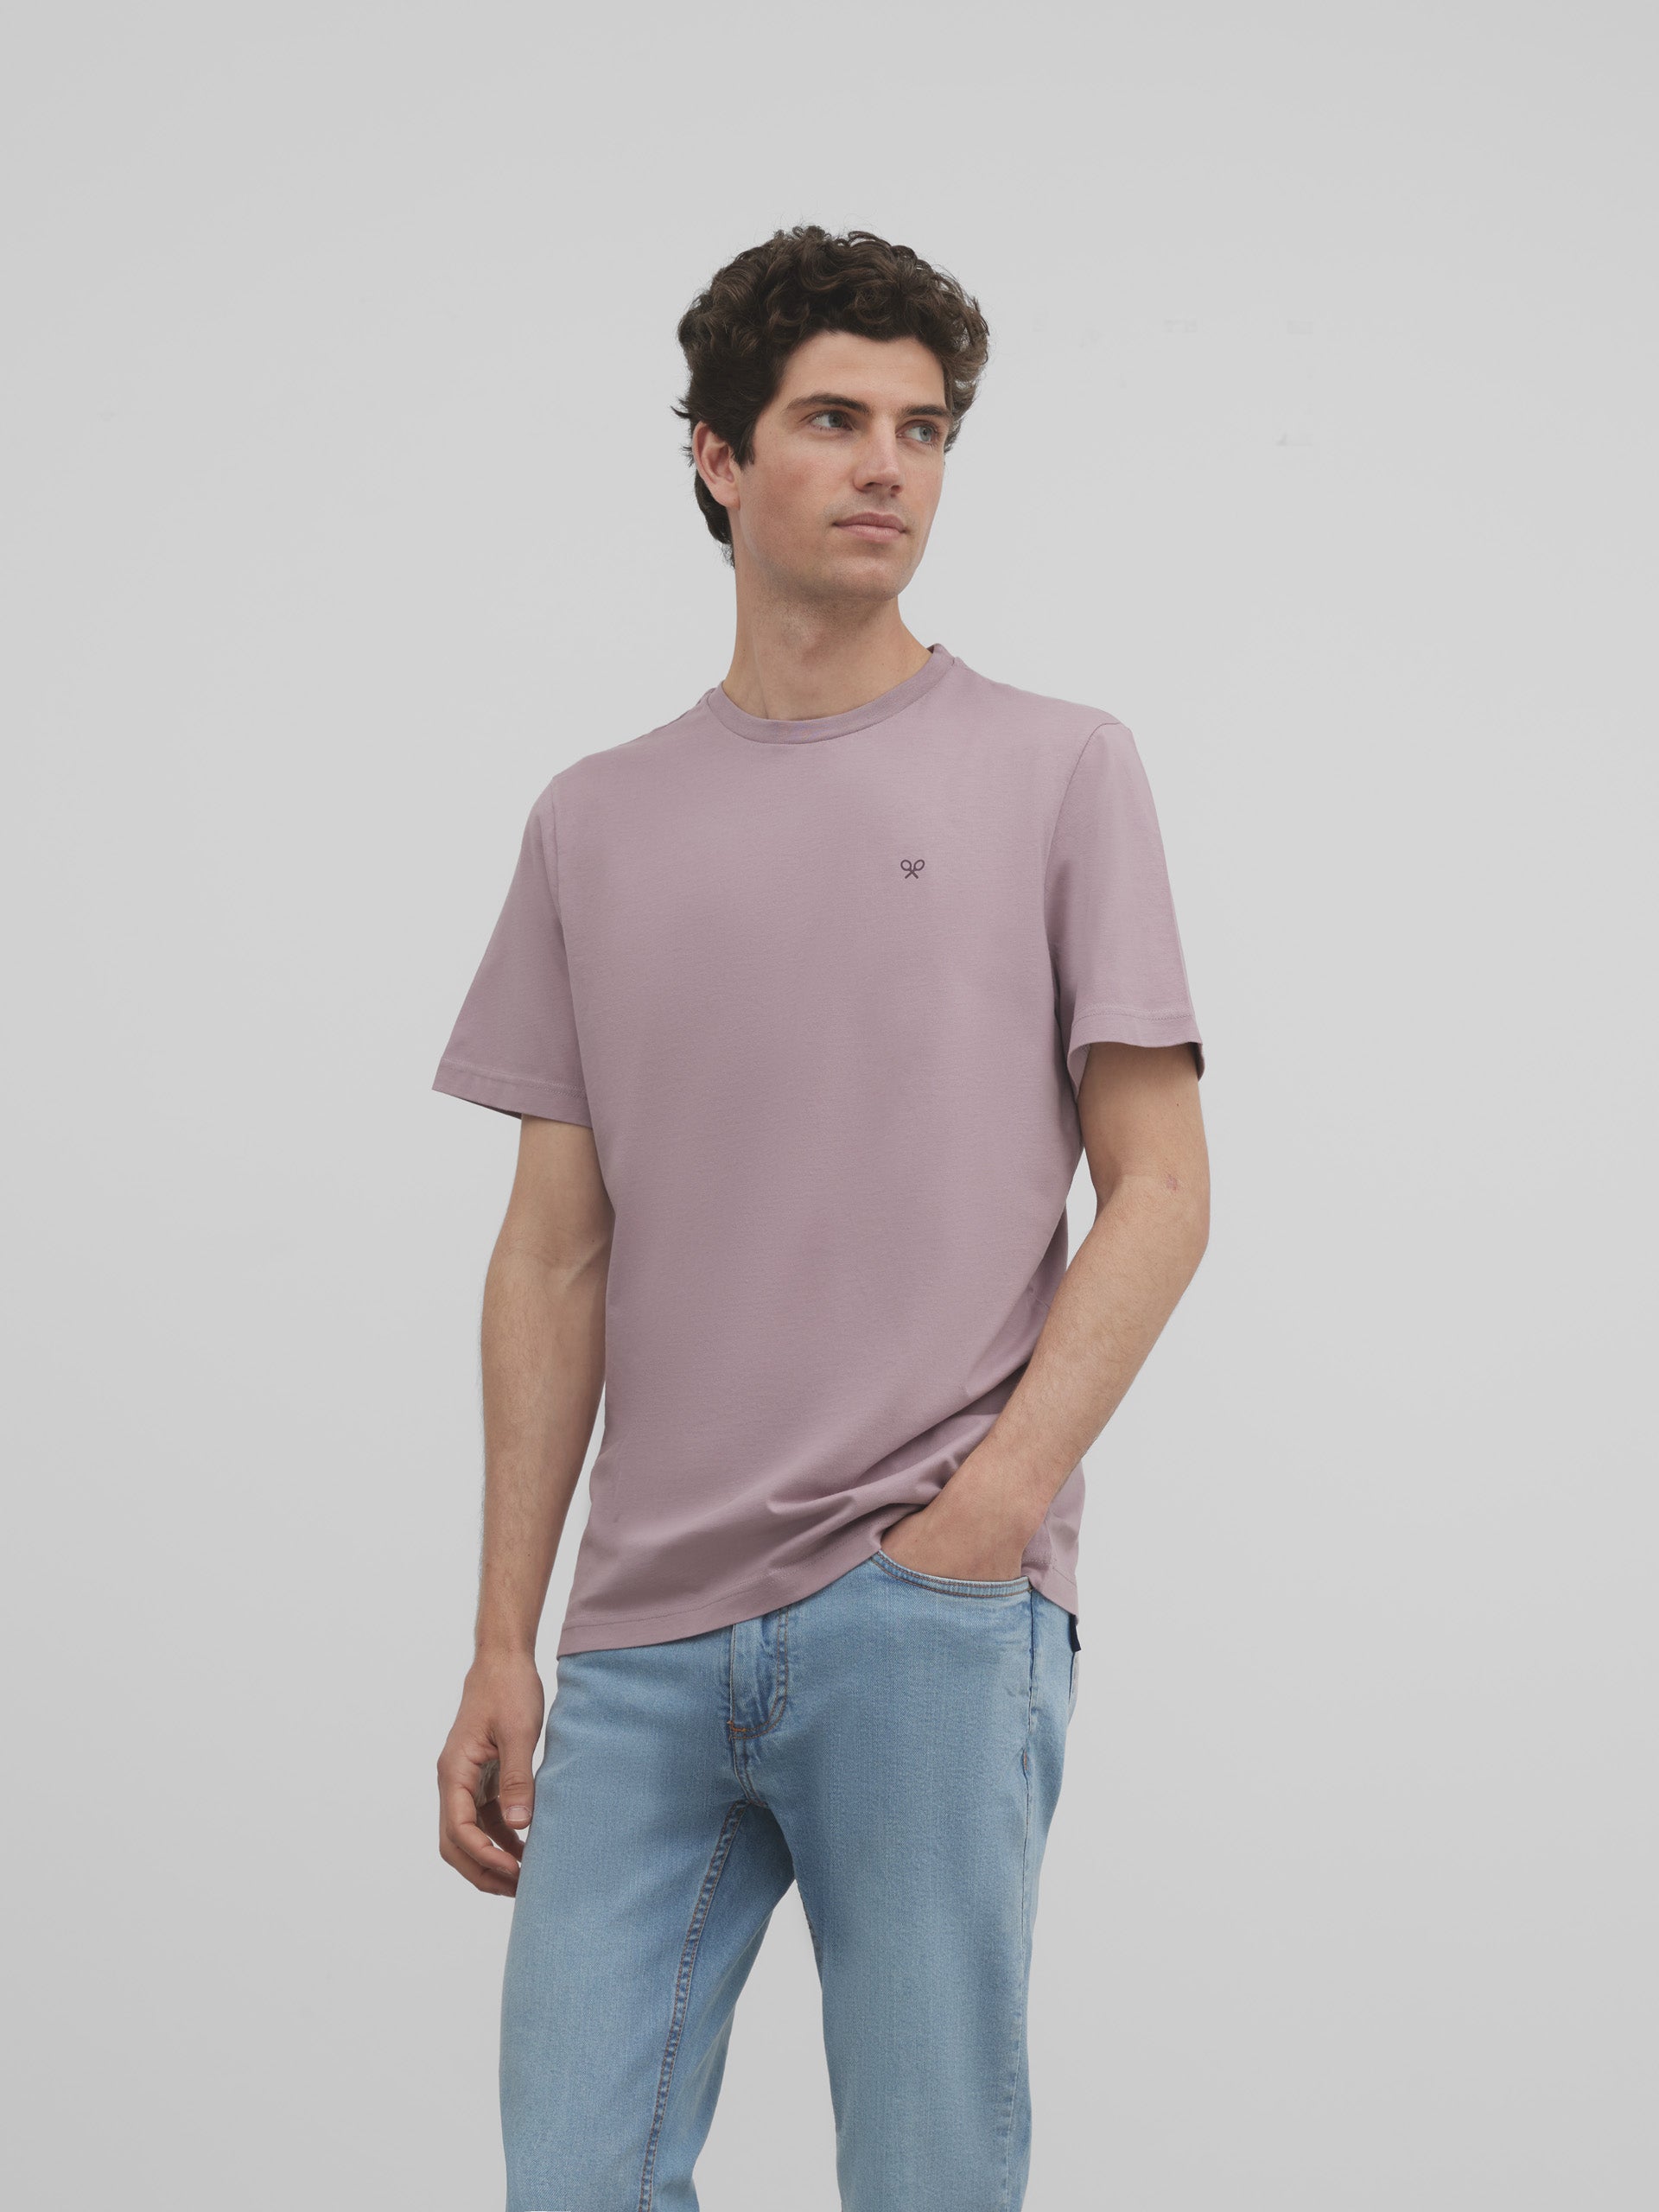 Silbon purple back racket t-shirt